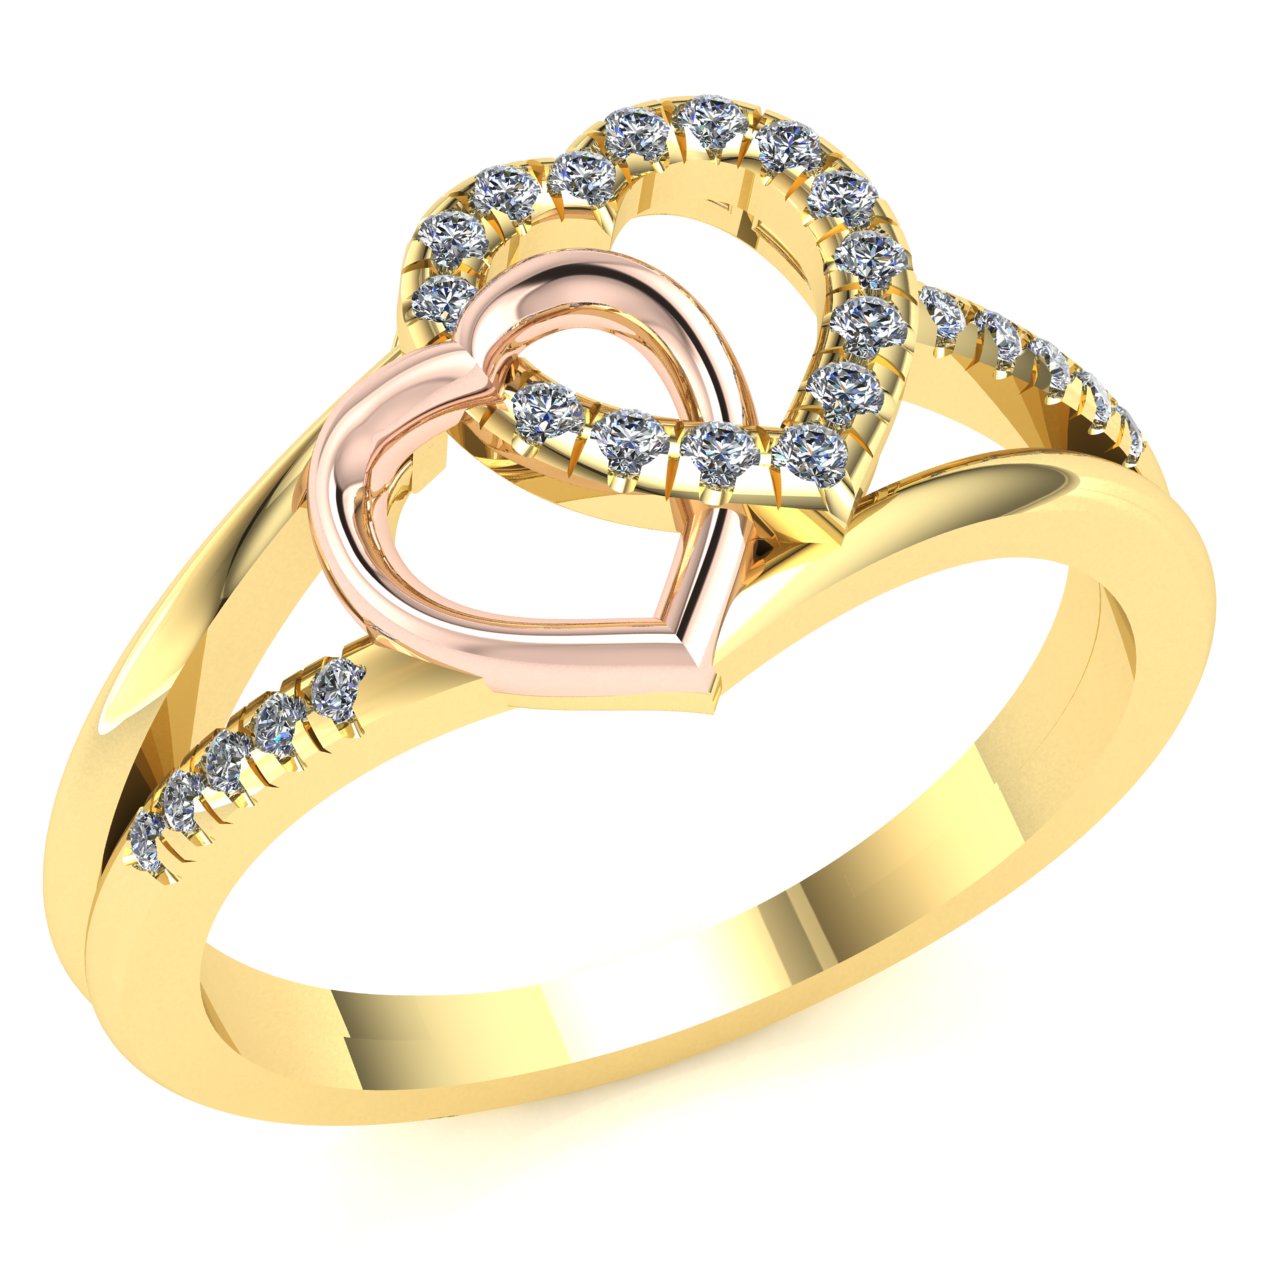 2carat Round Diamond Couple Heart Bridal Engagement Ring 10K Gold | eBay